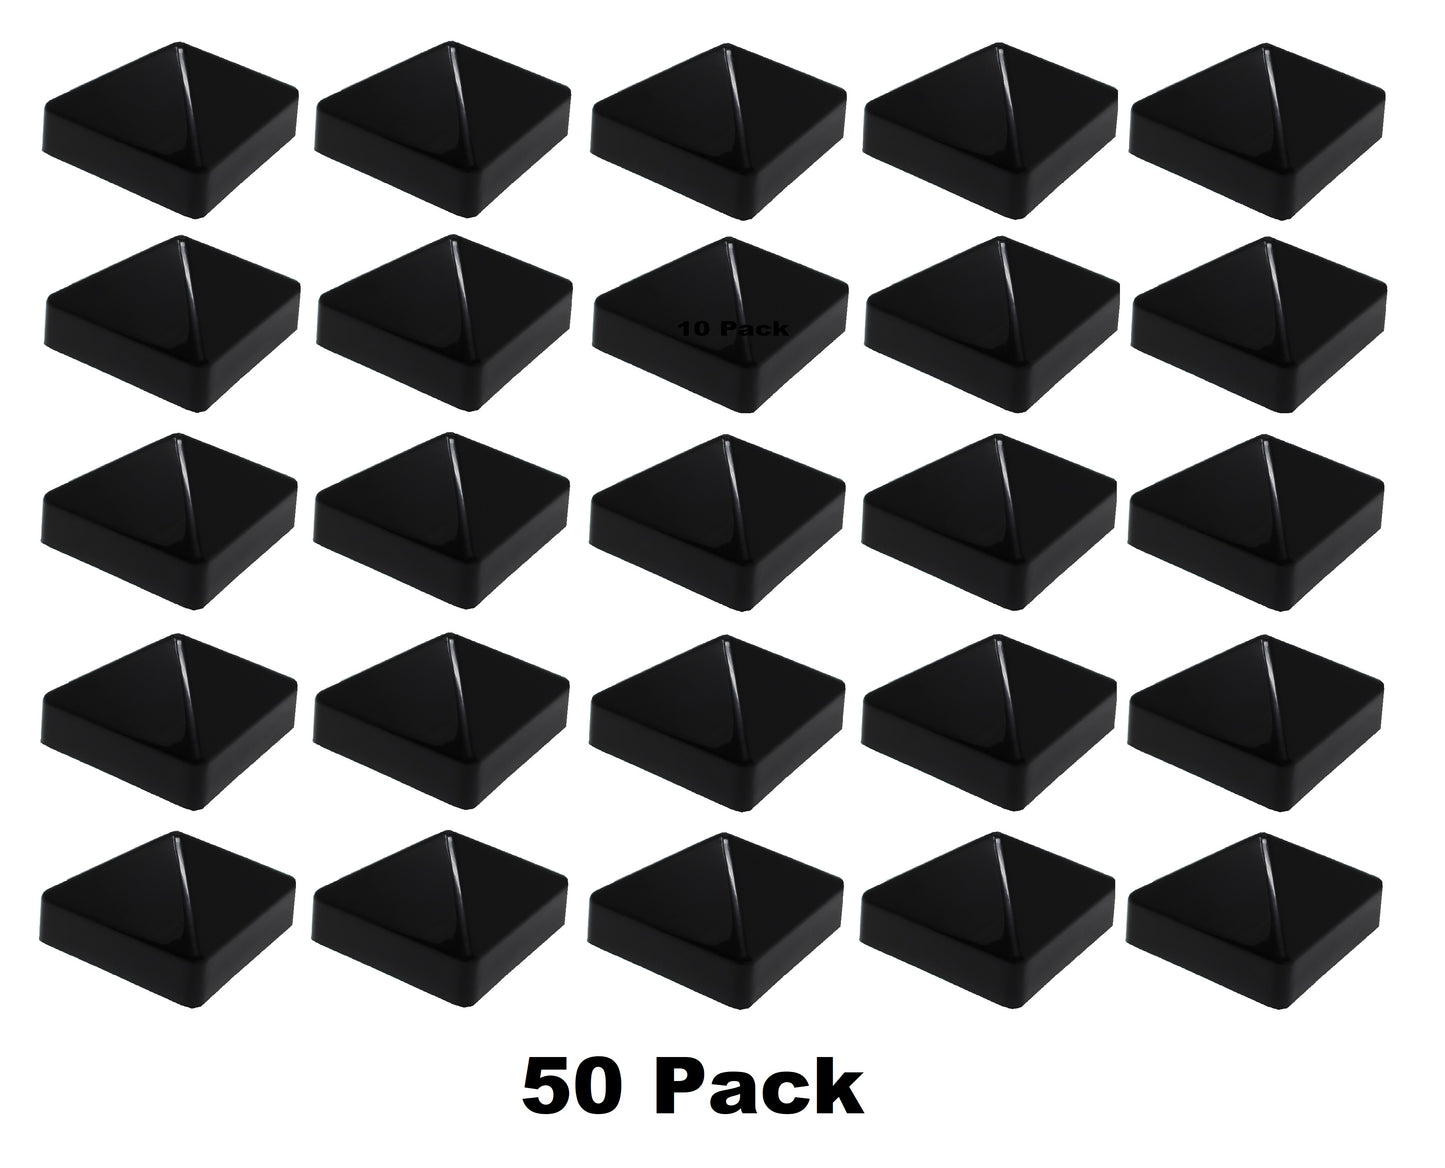 6x6 (5-7/8" x 5-7/8") Square Pyramid Style Cap Boat Dock Pylon Piling Cap Cover BLACK OR WHITE